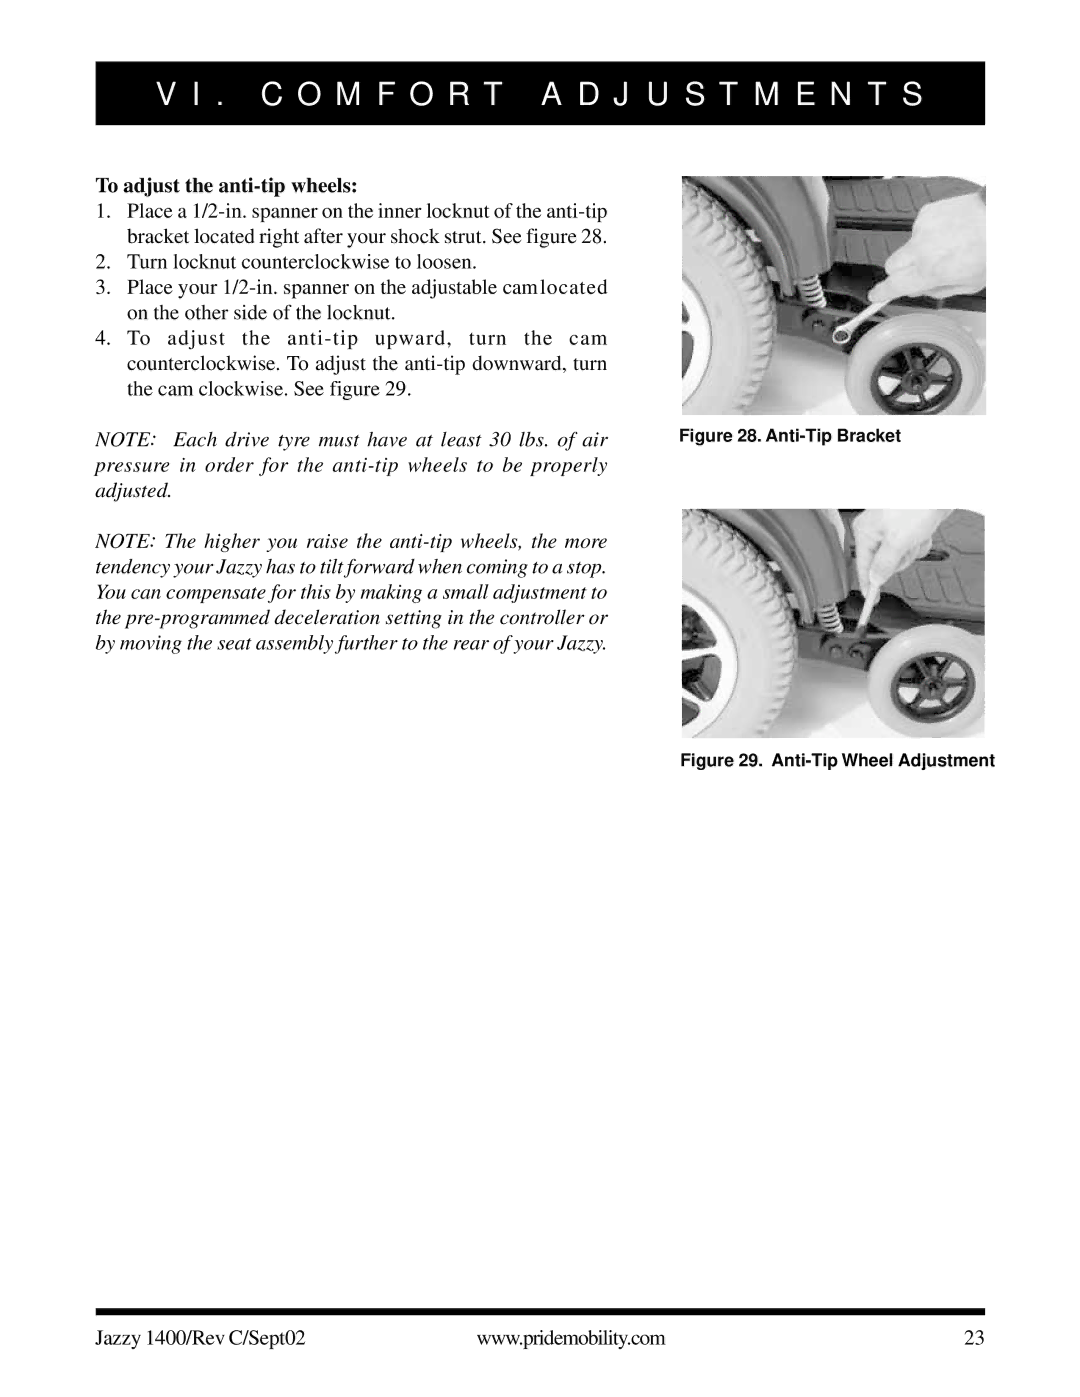 Pride Mobility 1400 owner manual To adjust the anti-tip wheels, Anti-Tip Bracket 